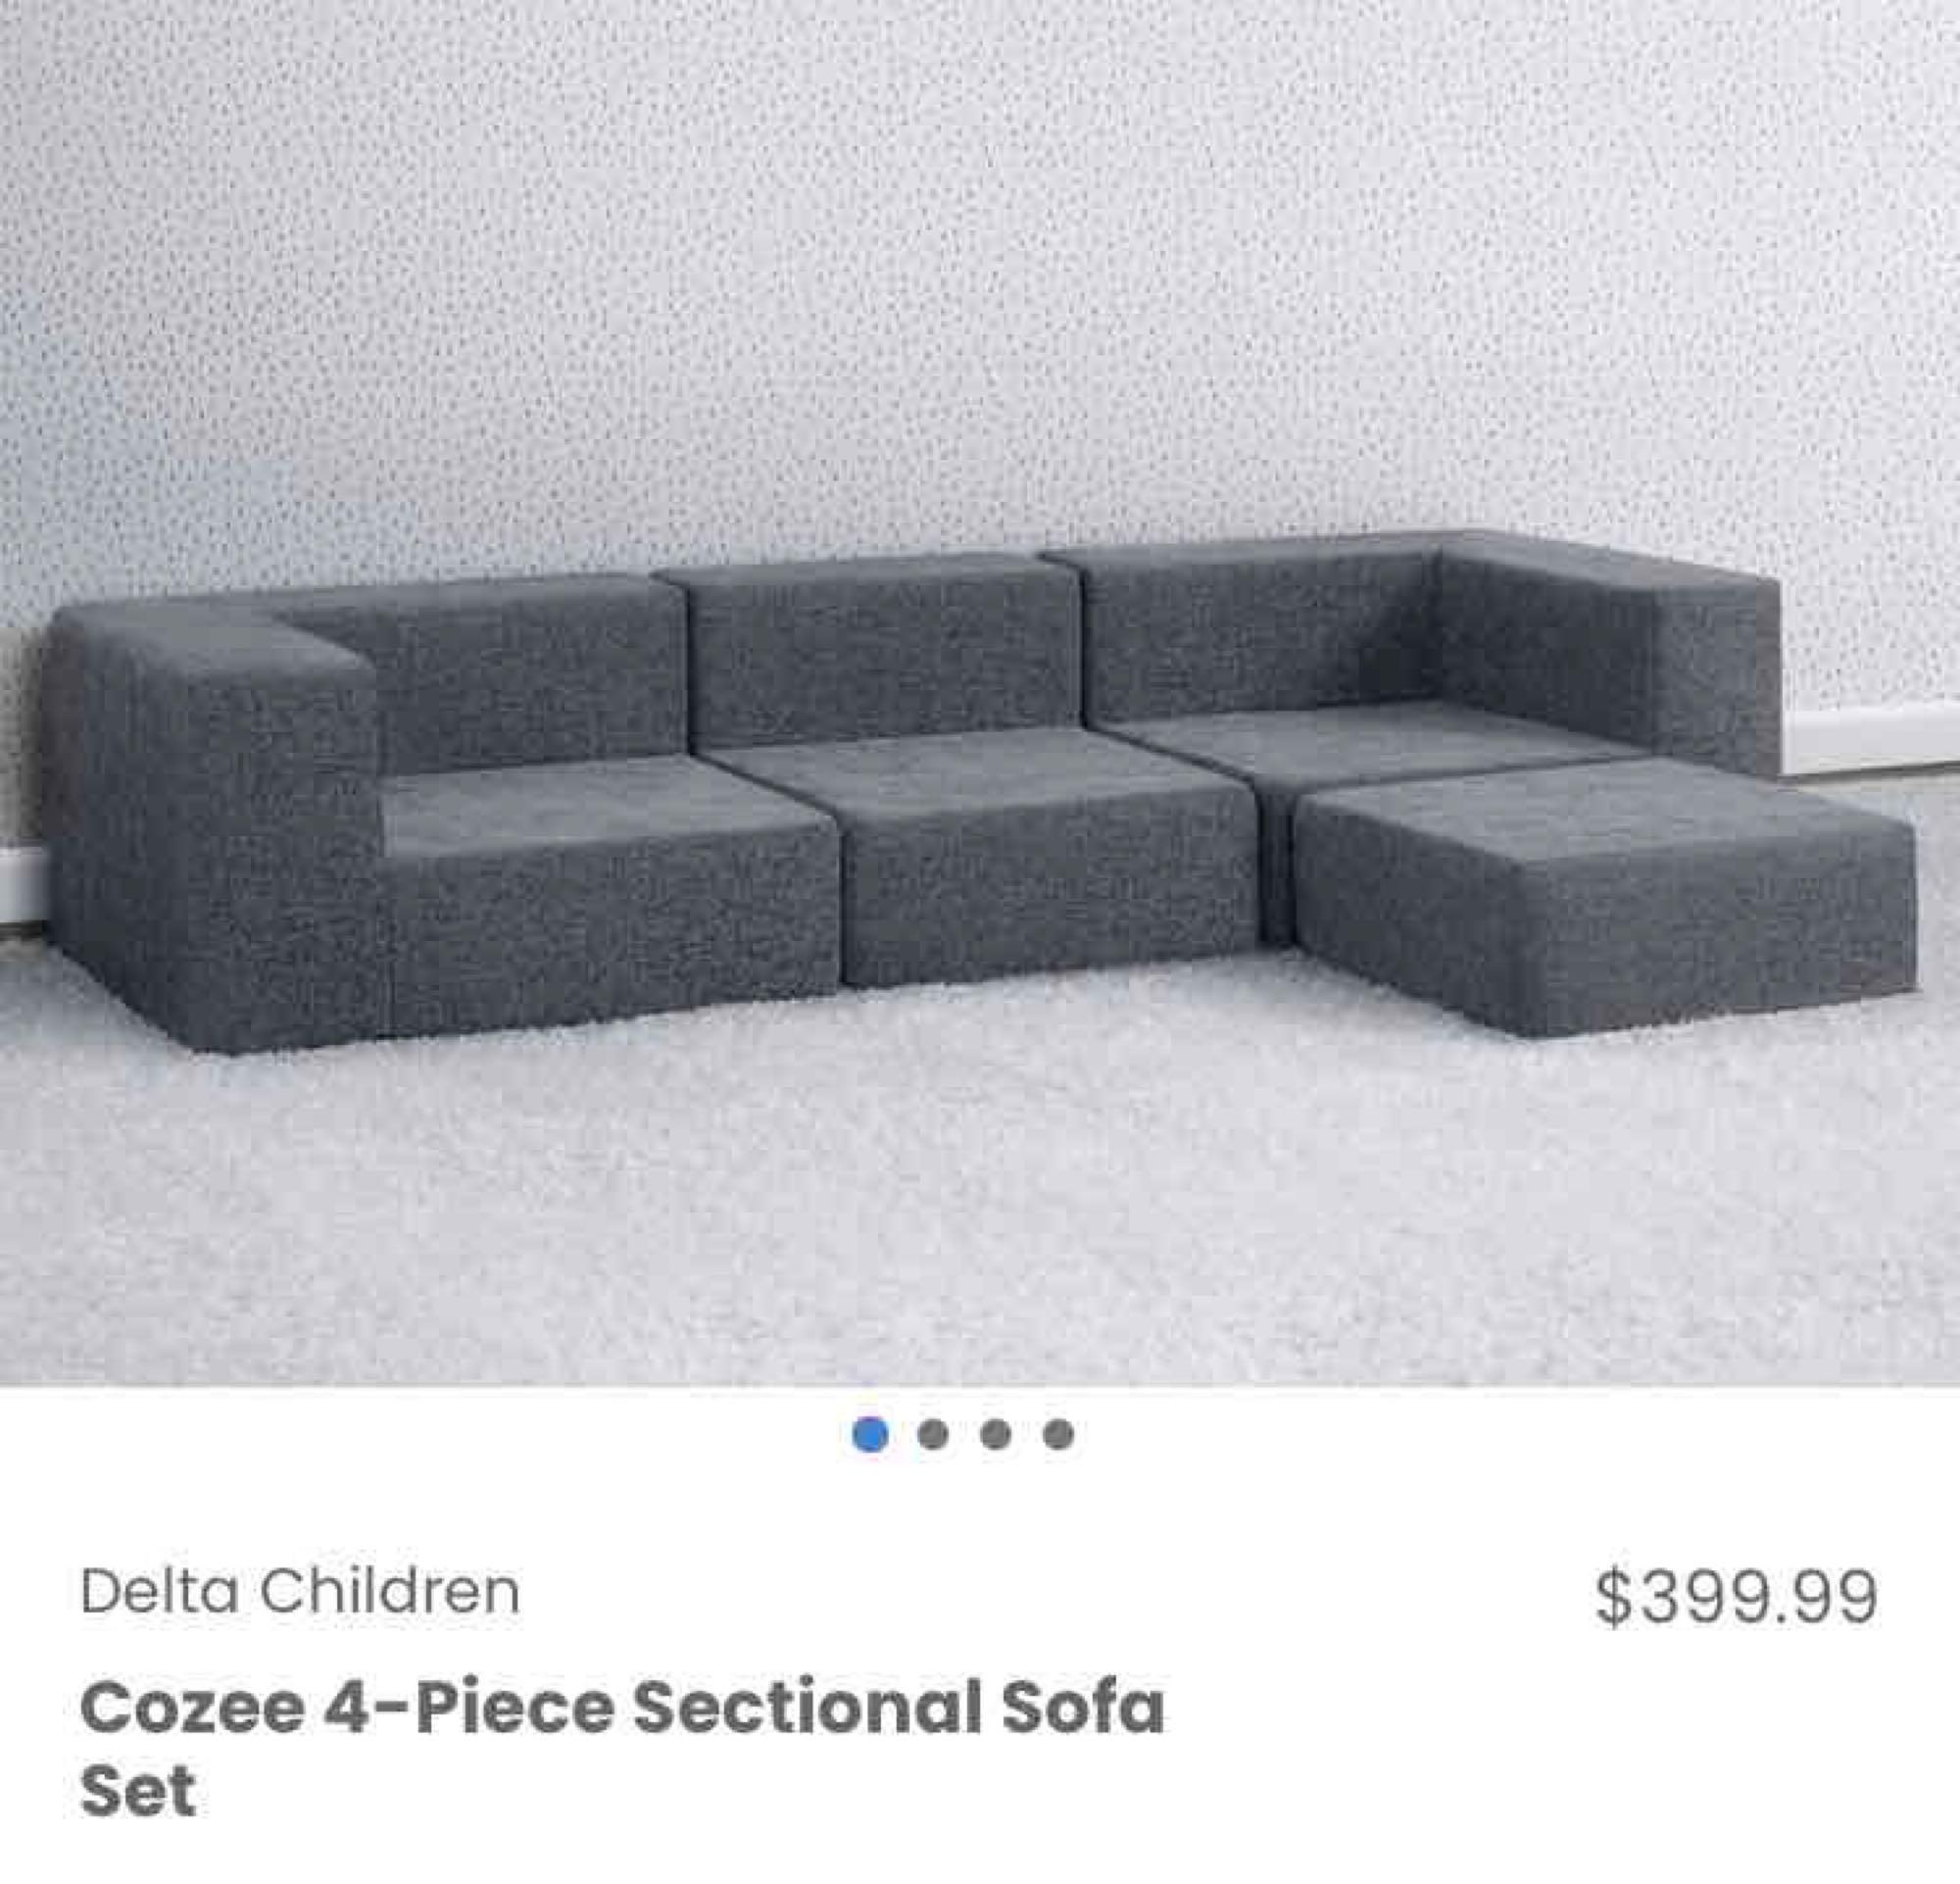 Delta Children Cozee 4-Piece Sectional Sofa Set